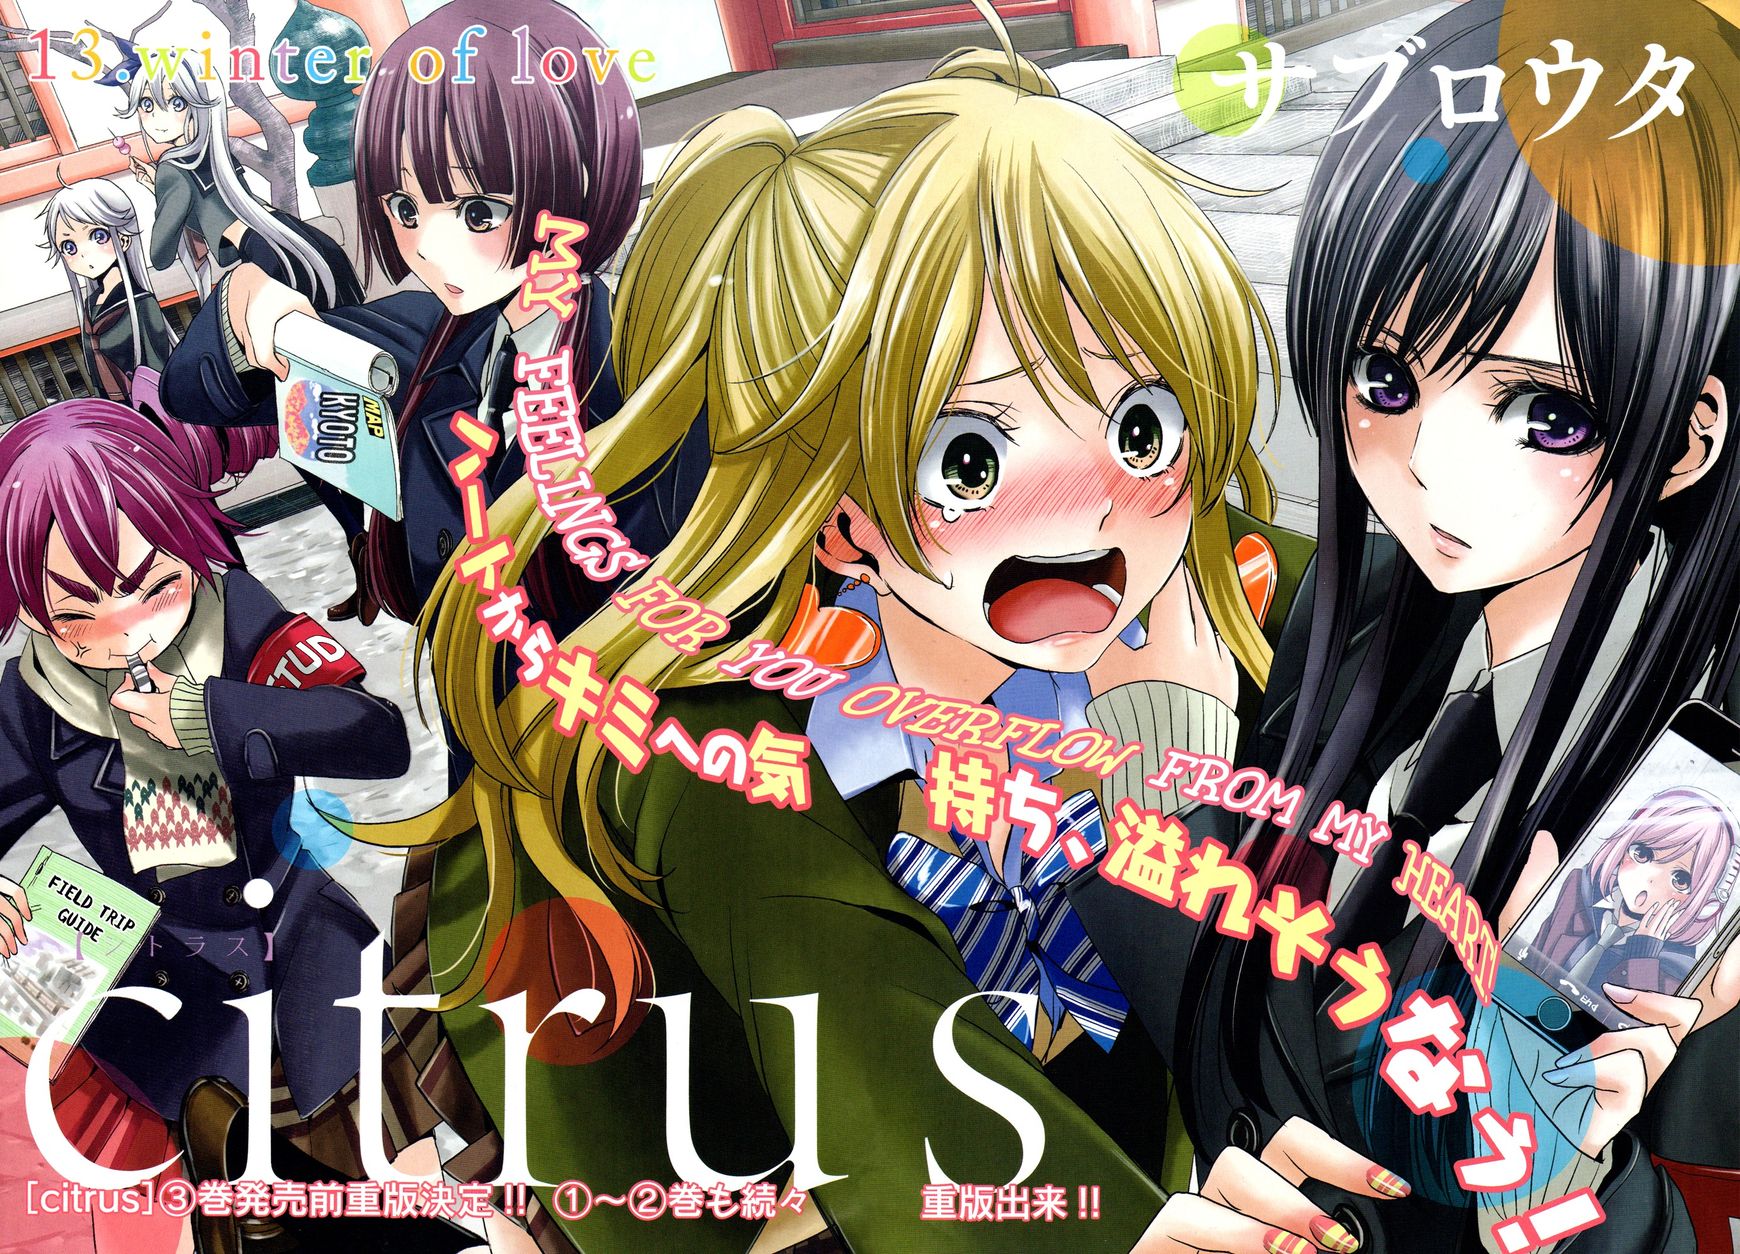 DVD Anime Citrus - Complete TV Series (Uncut) with English Dubbed | eBay-demhanvico.com.vn